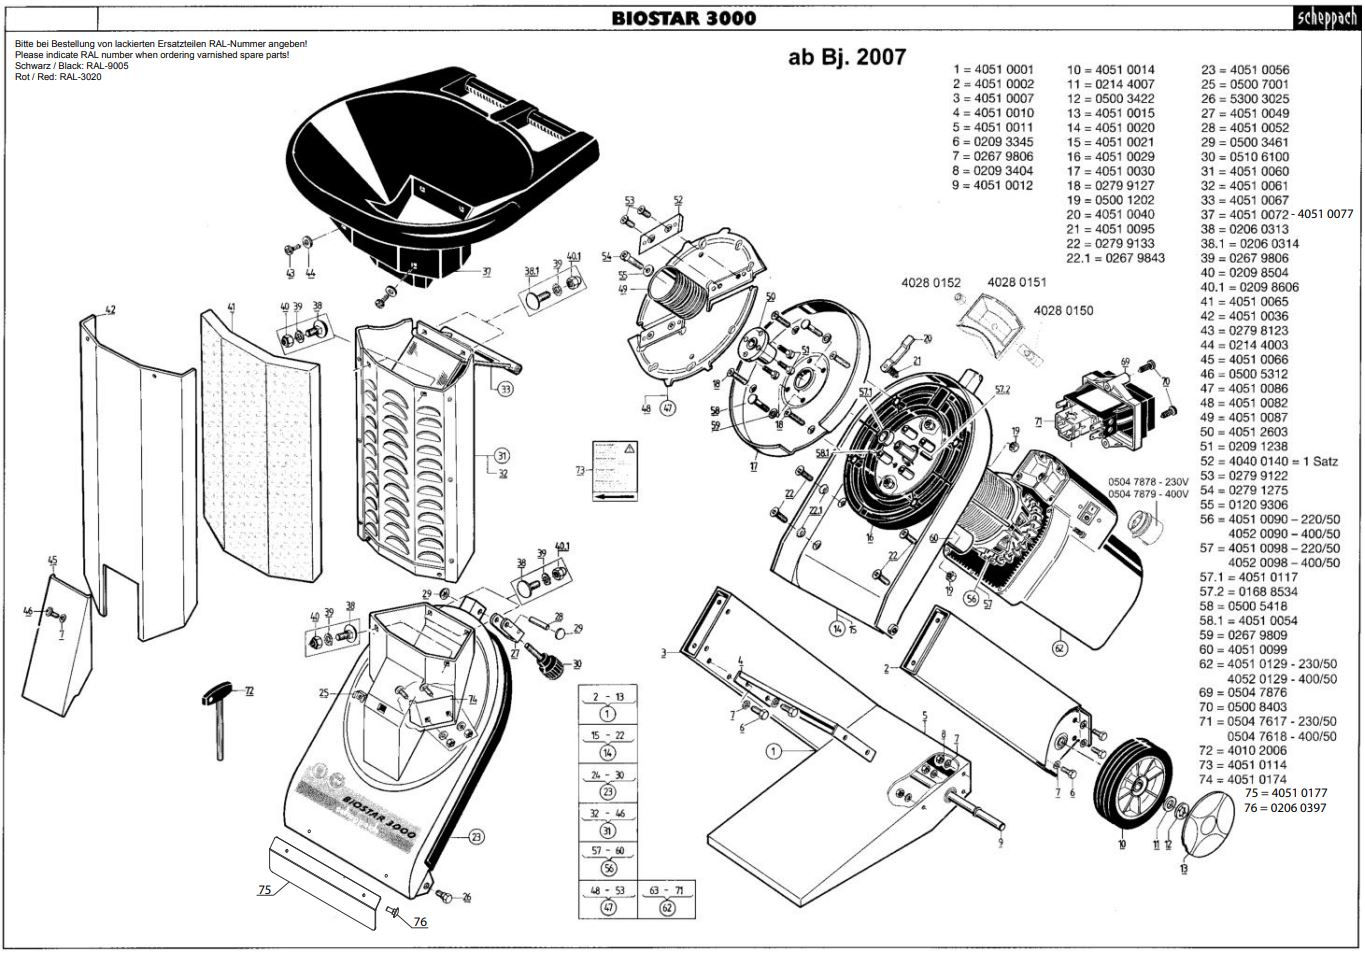 scheppach Biostar 3000 40510000 Jackets Garden Shredder Instruction Manual - Biostar 3000